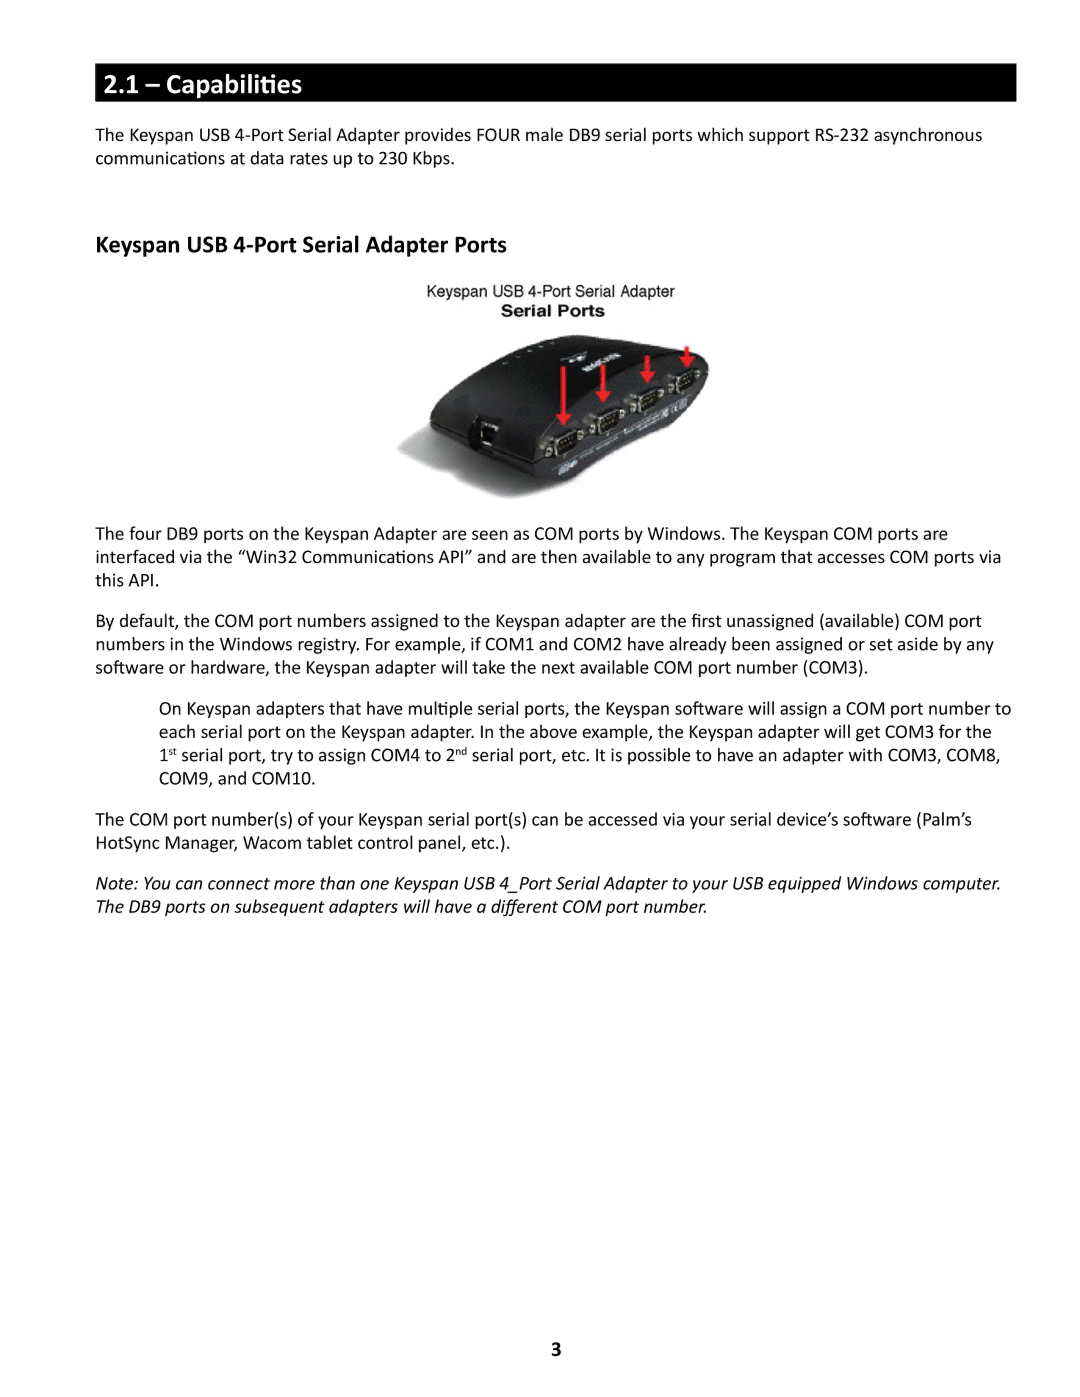 Keyspan USA-49WG owner manual Capabilities, Keyspan USB 4-Port Serial Adapter Ports 